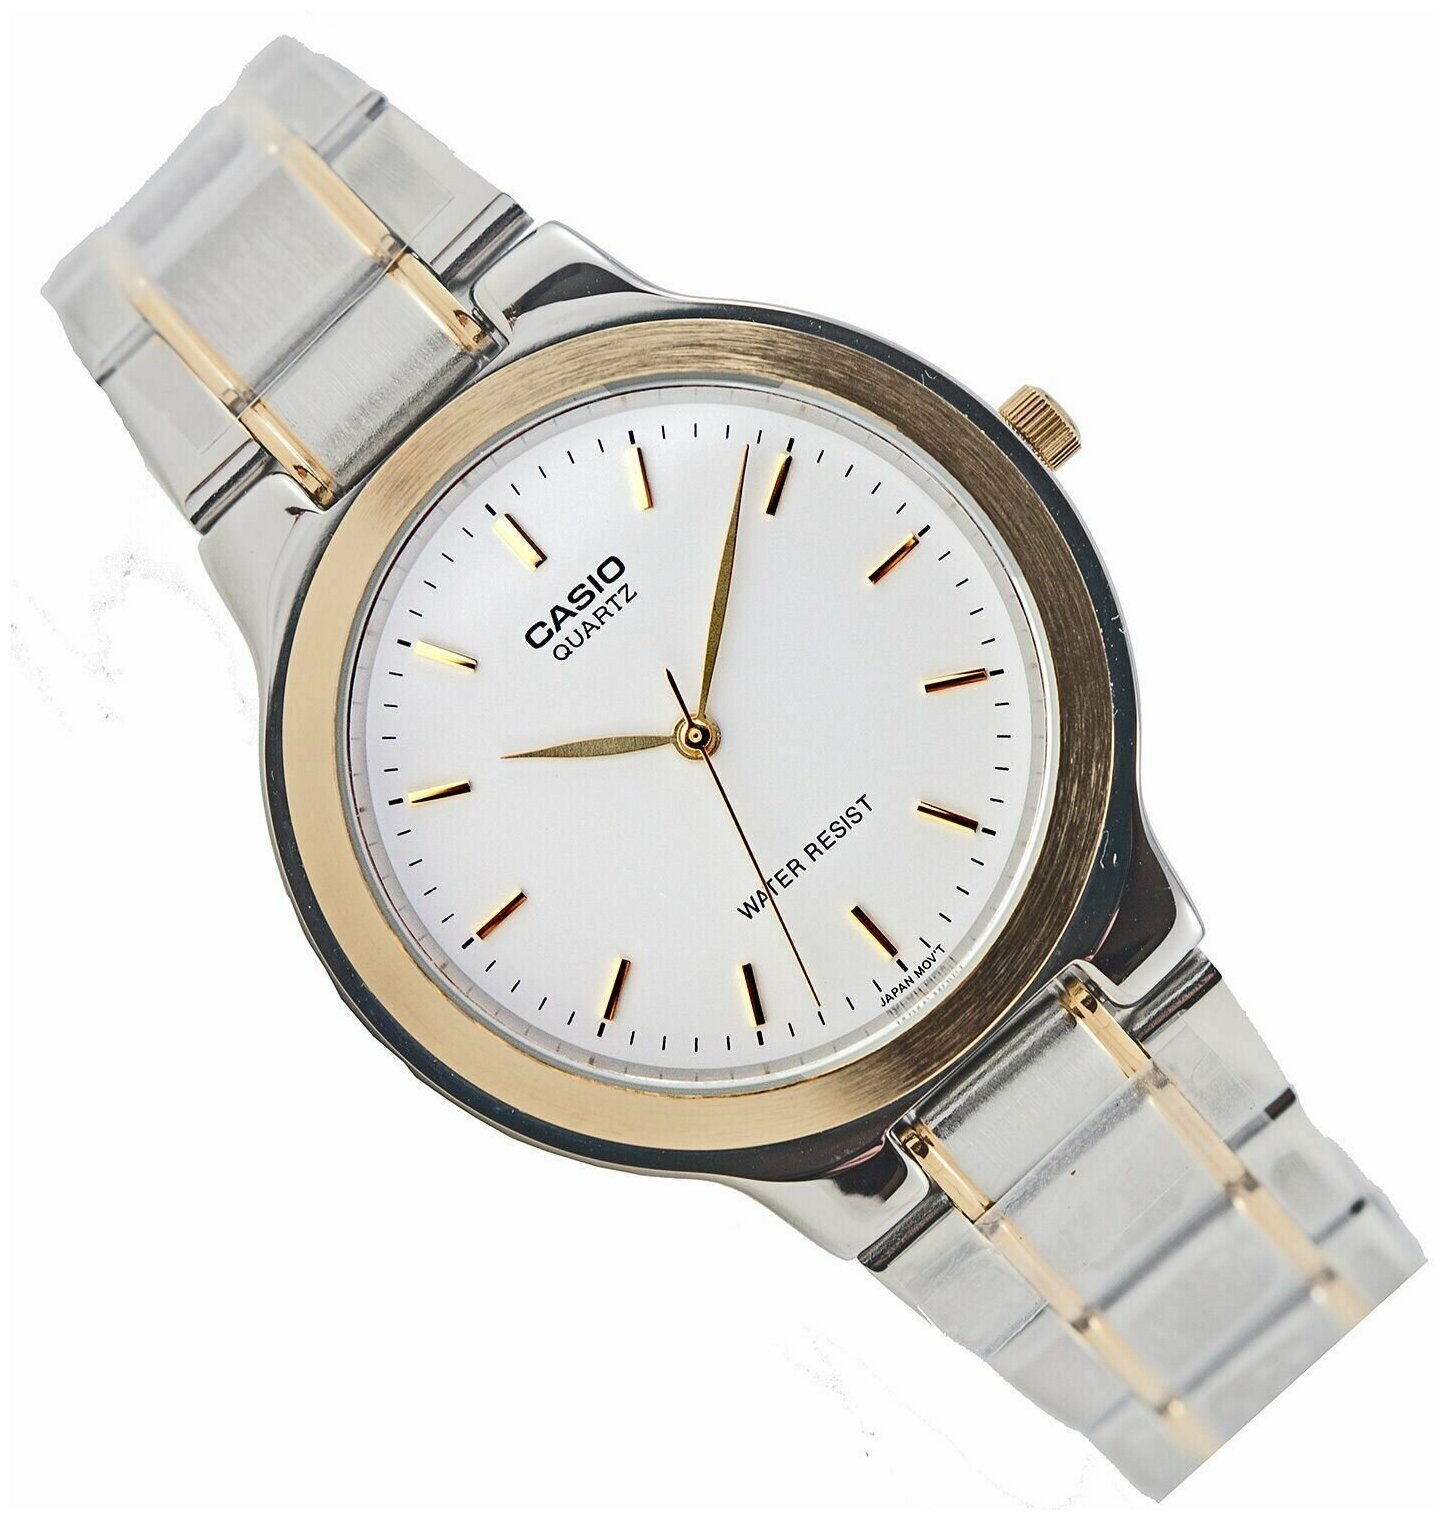 Наручные часы CASIO Collection MTP-1131G-7A